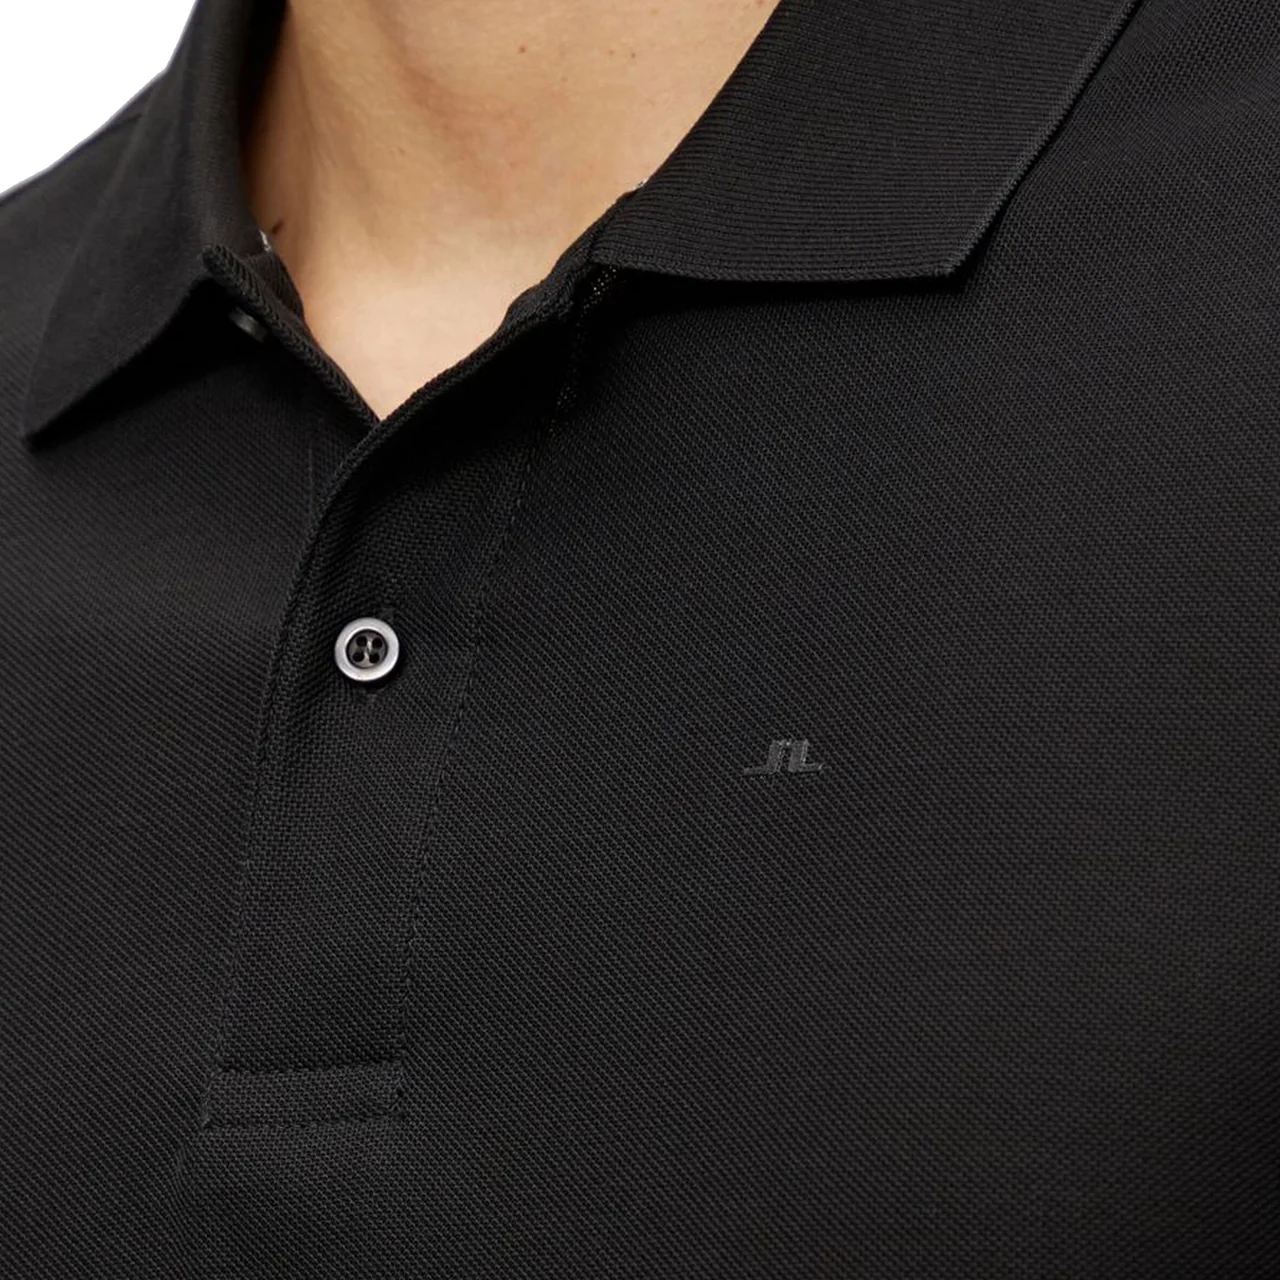 J.Lindeberg Troy ST Pique Polo Shirt Black